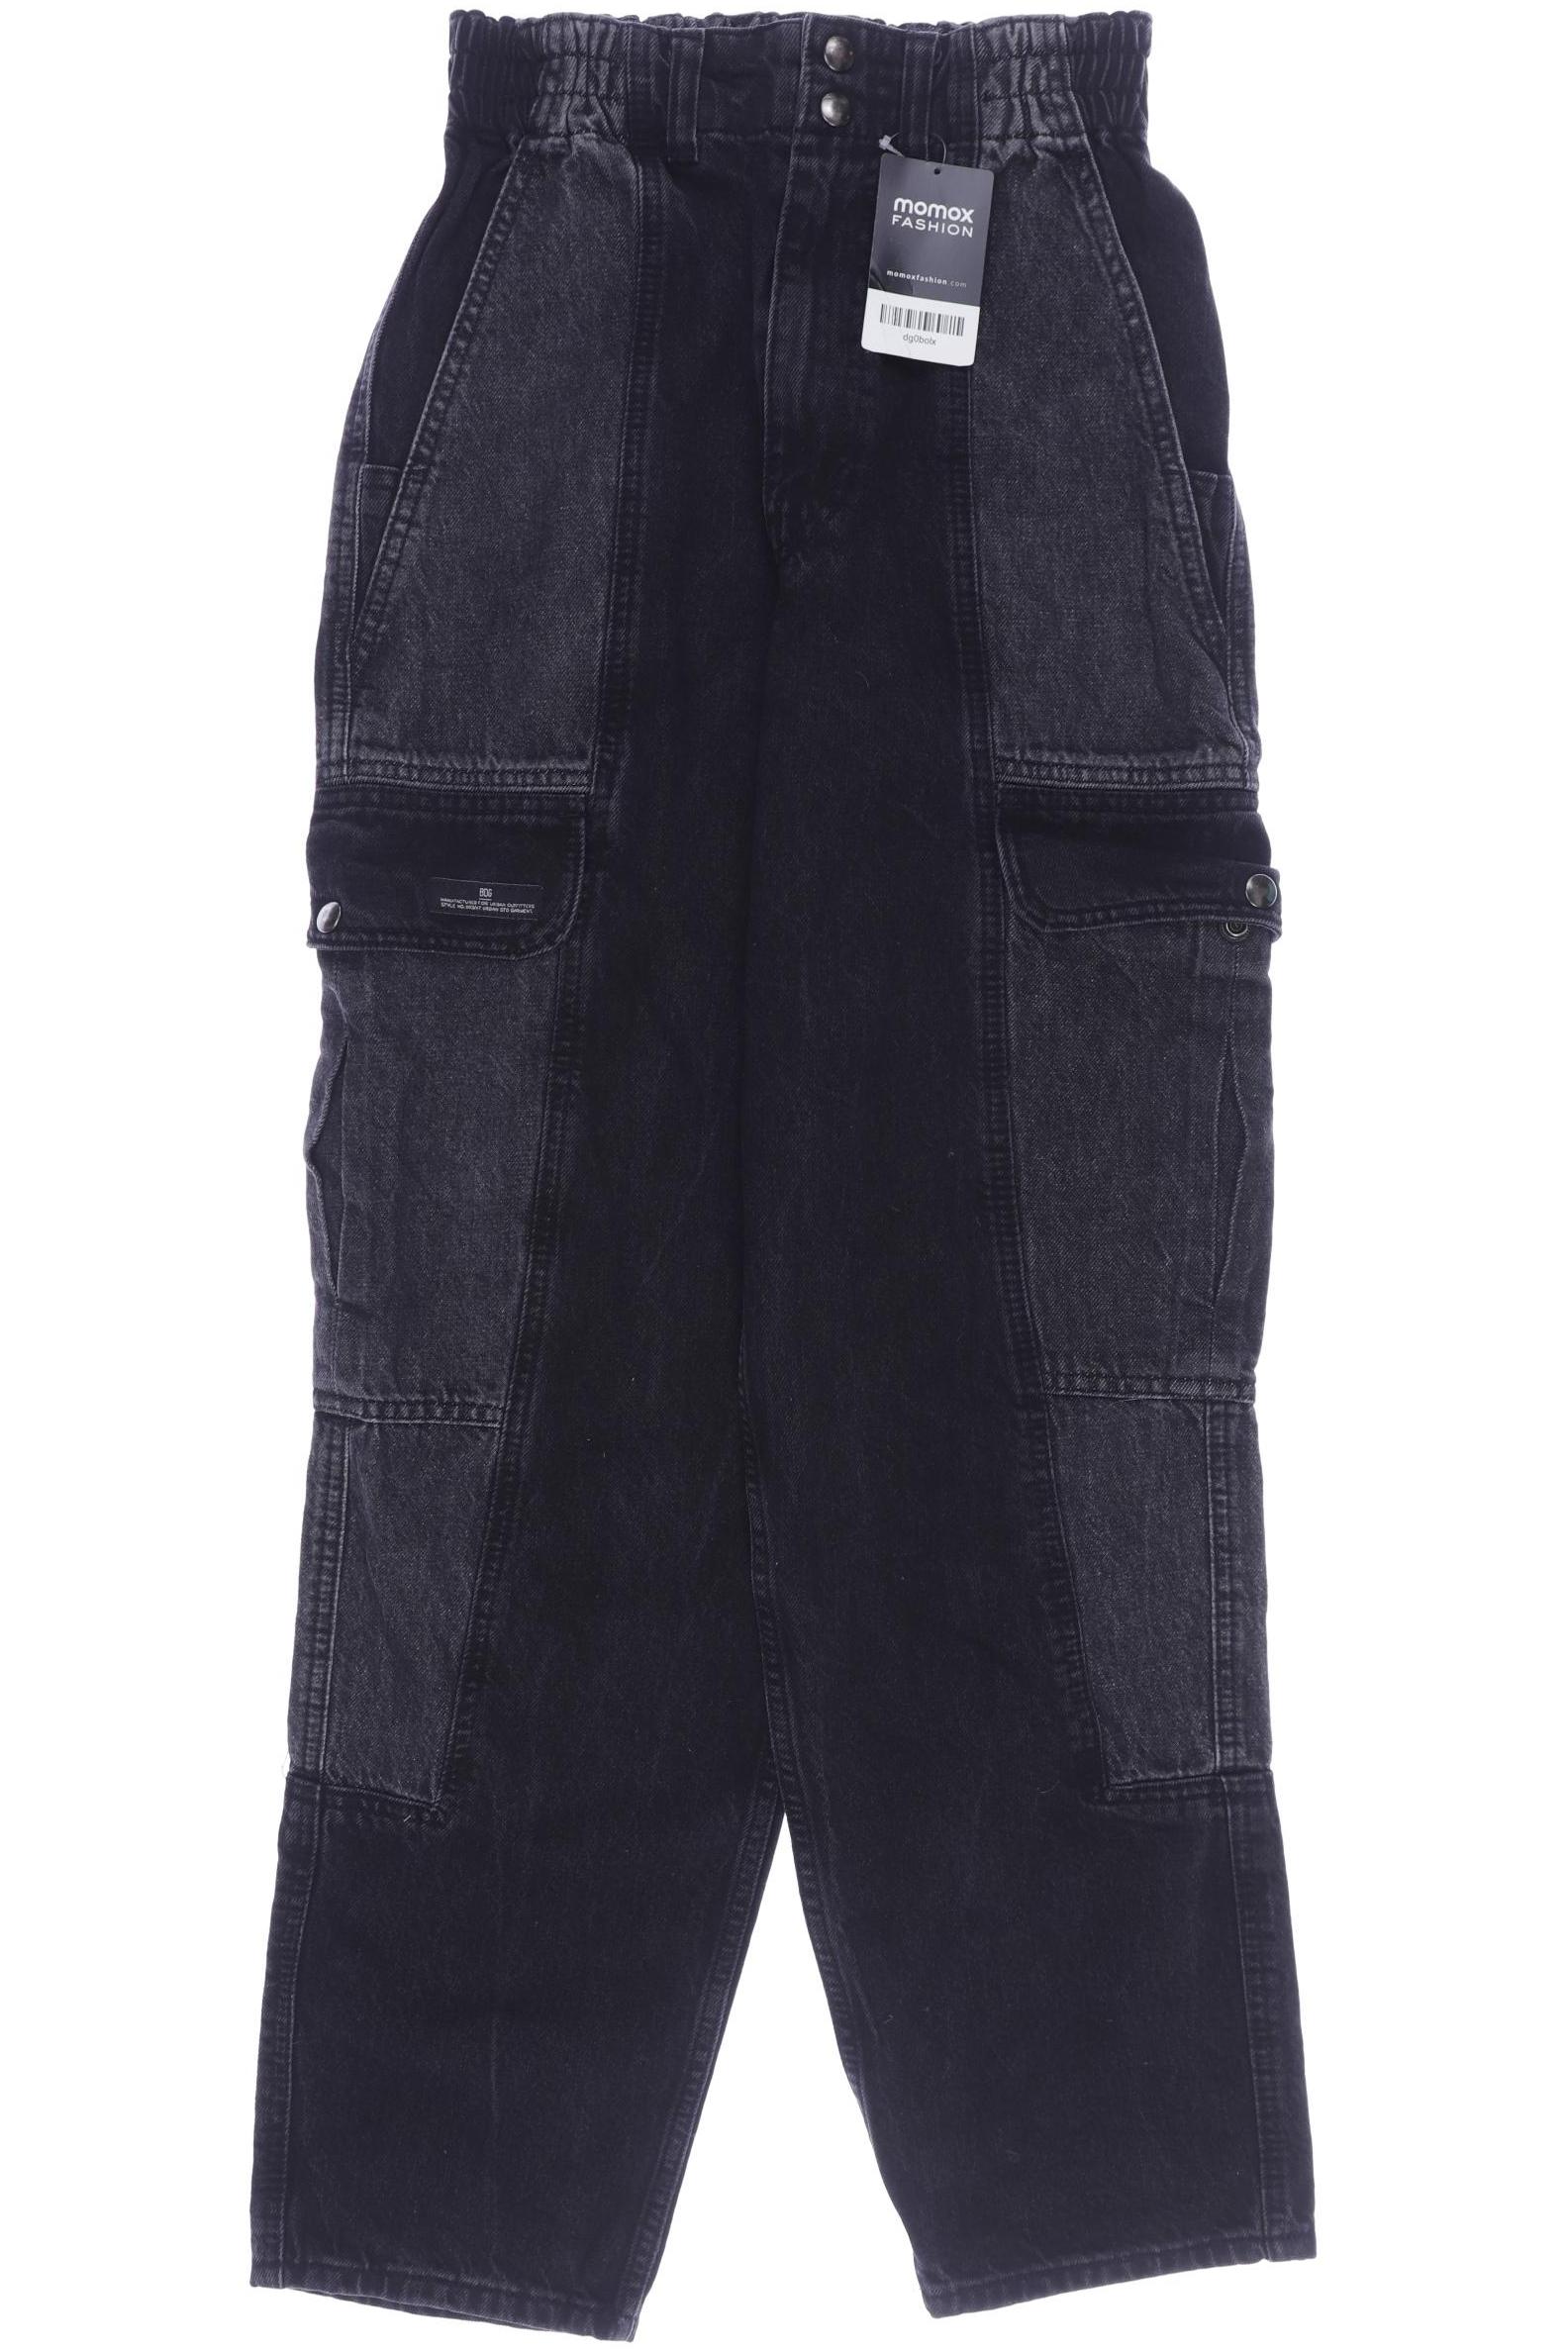 Urban Outfitters Damen Jeans, grau von Urban Outfitters